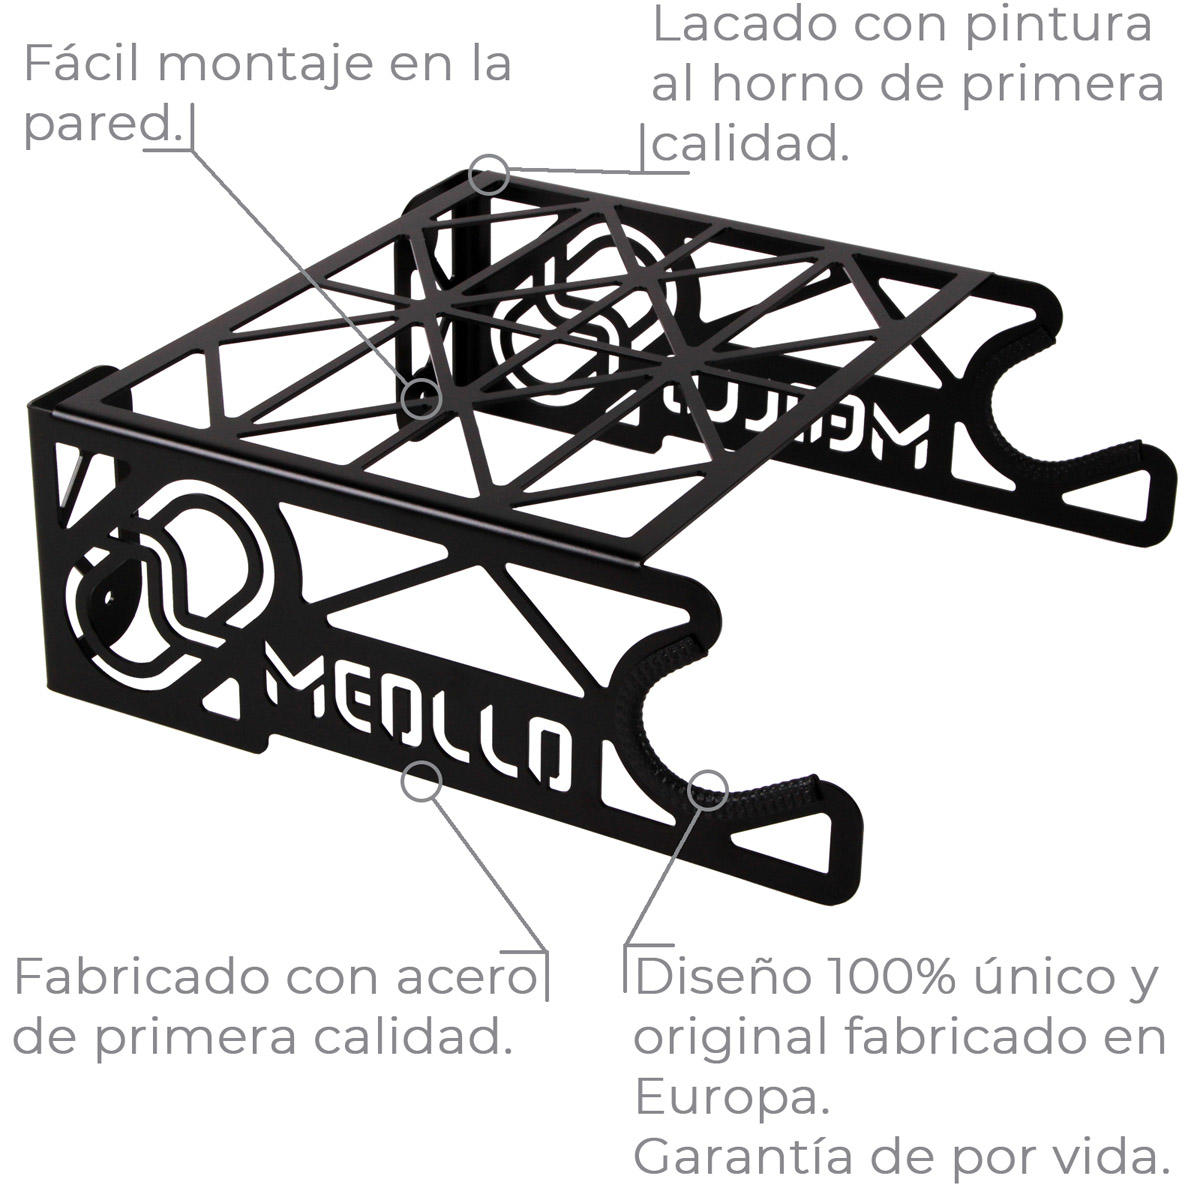 Bicicleta soporte detalles